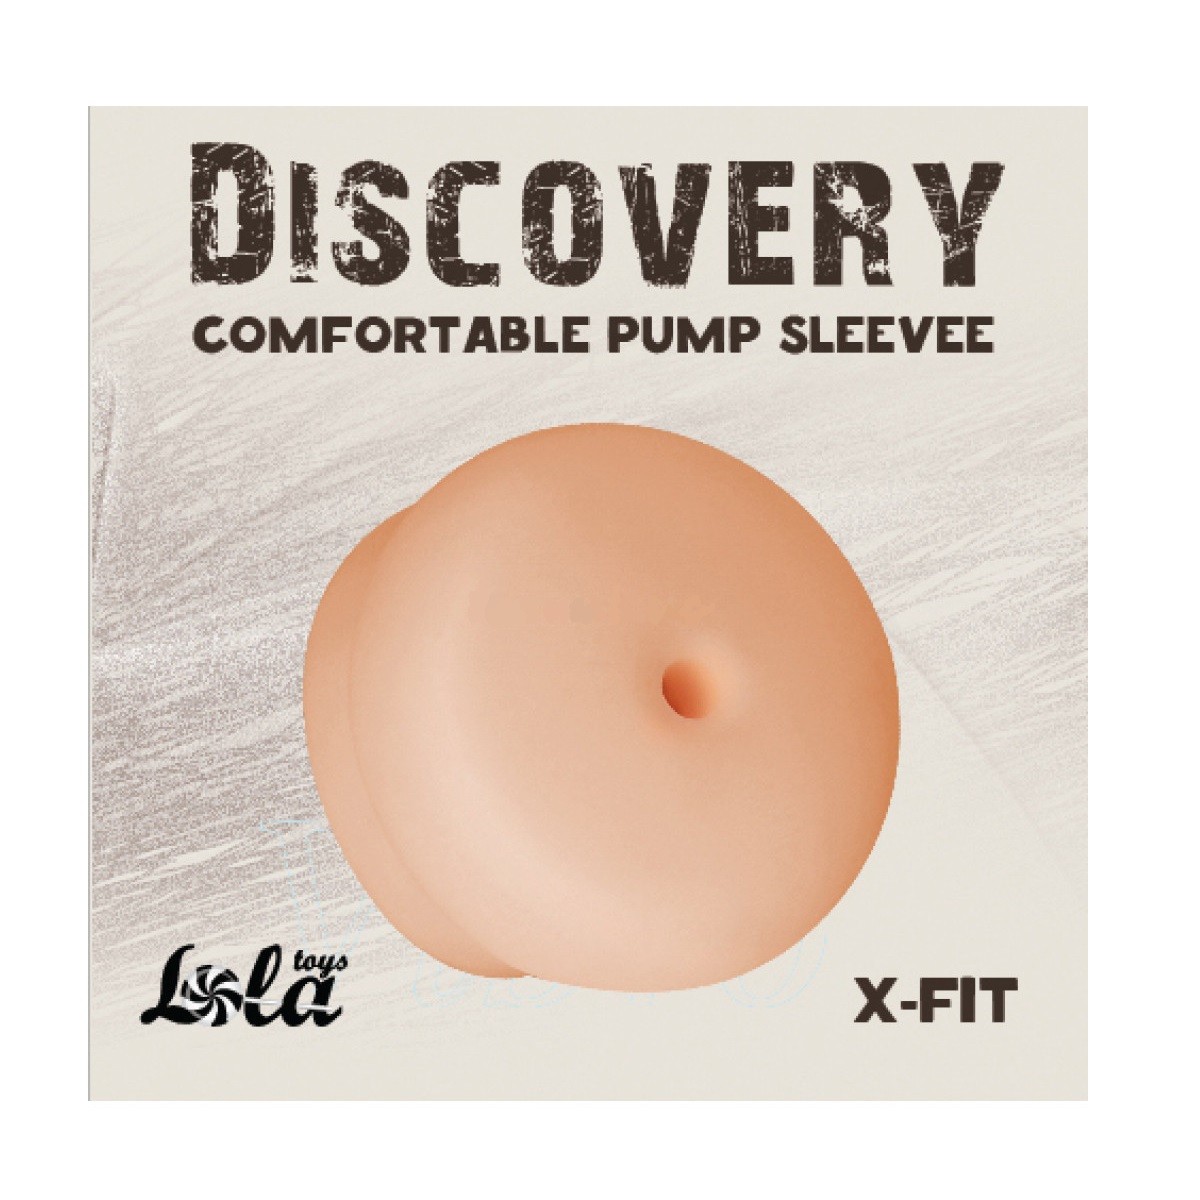 Discovery Атлас тела. Секс и организм смотреть онлайн, 